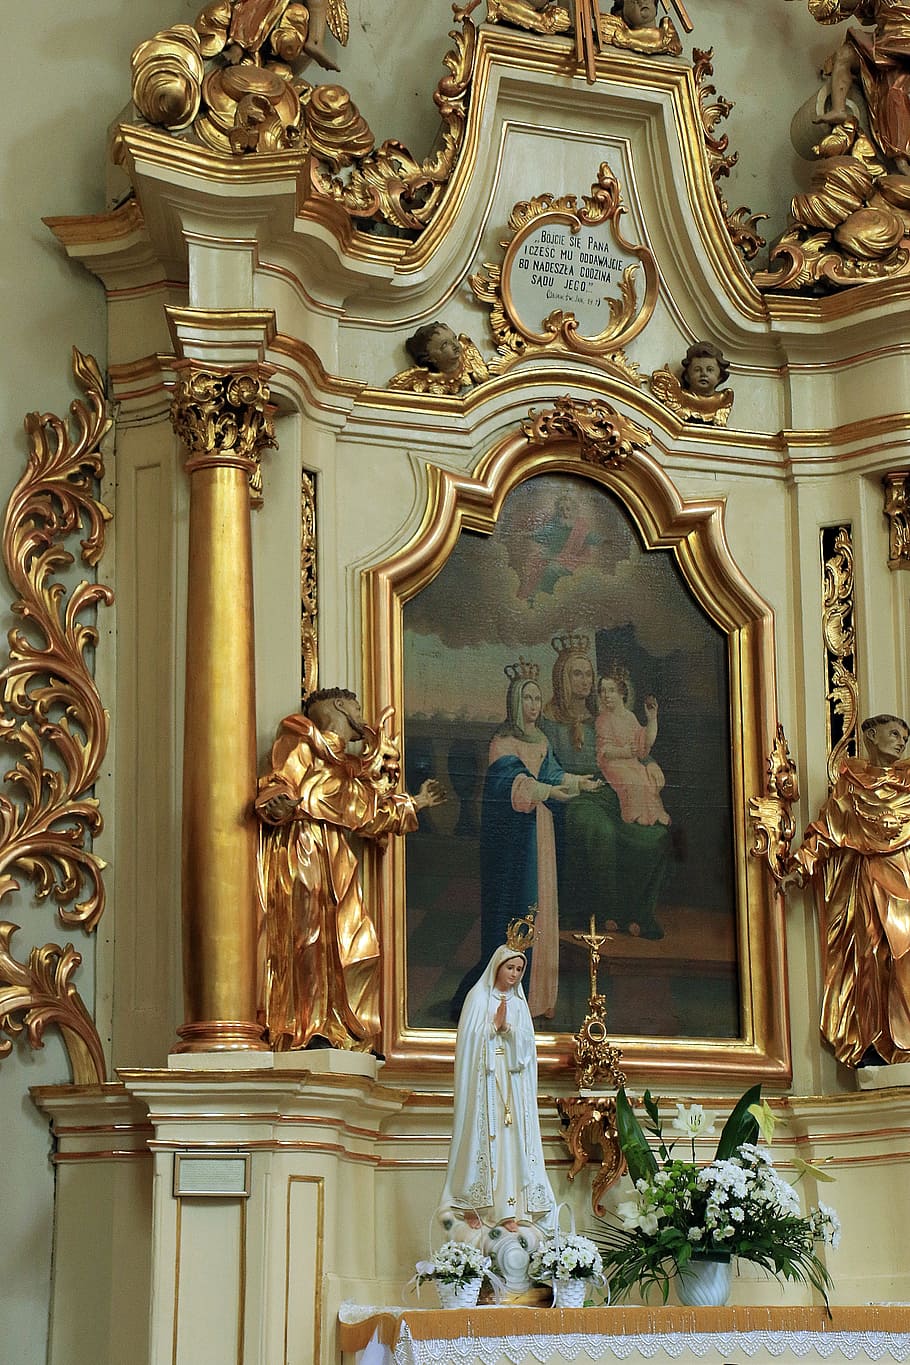 Altar, Church, Mother Of God, the altar, mary, interior of the church